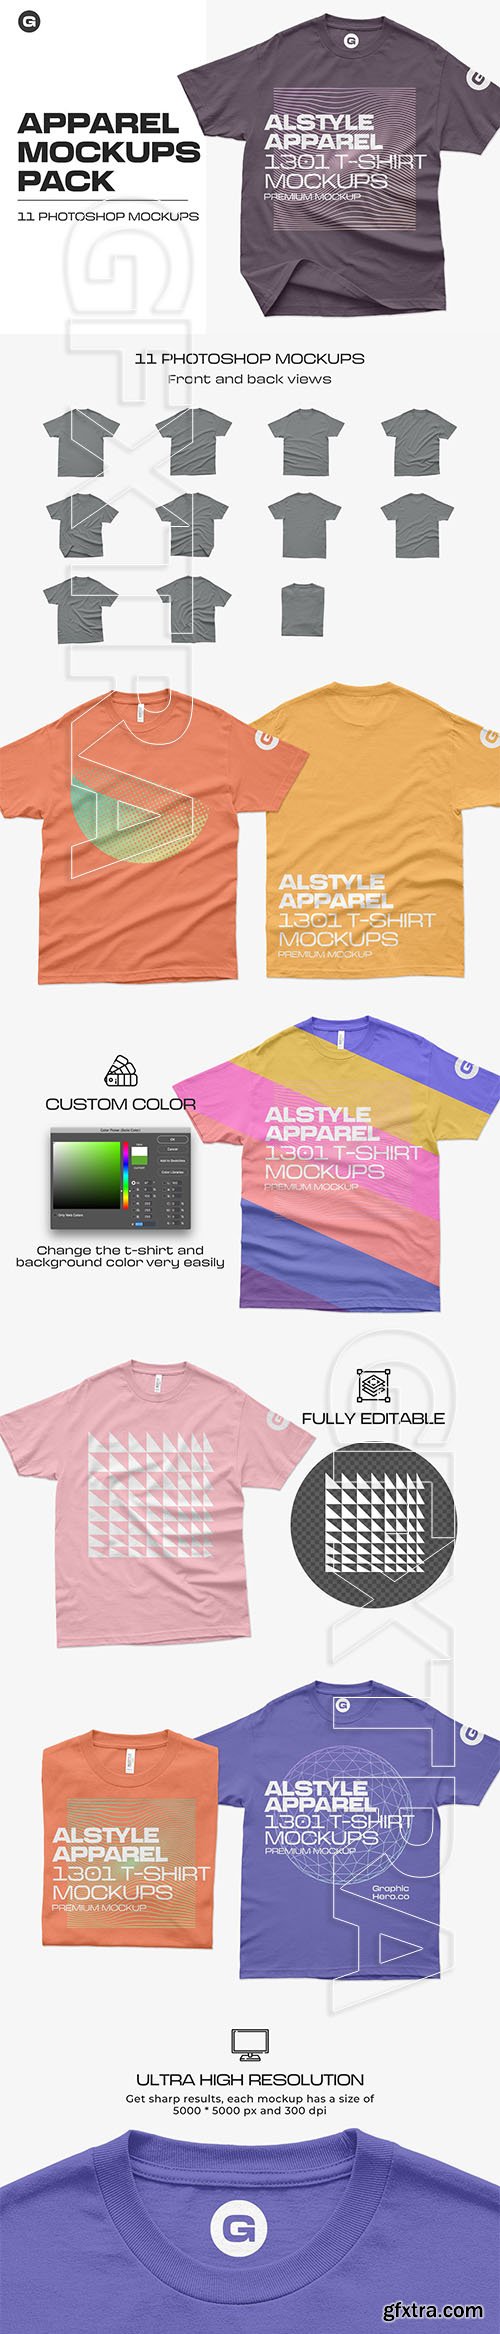 CreativeMarket - Alstyle Apparel 1301 T-Shirt Mockups 5933439